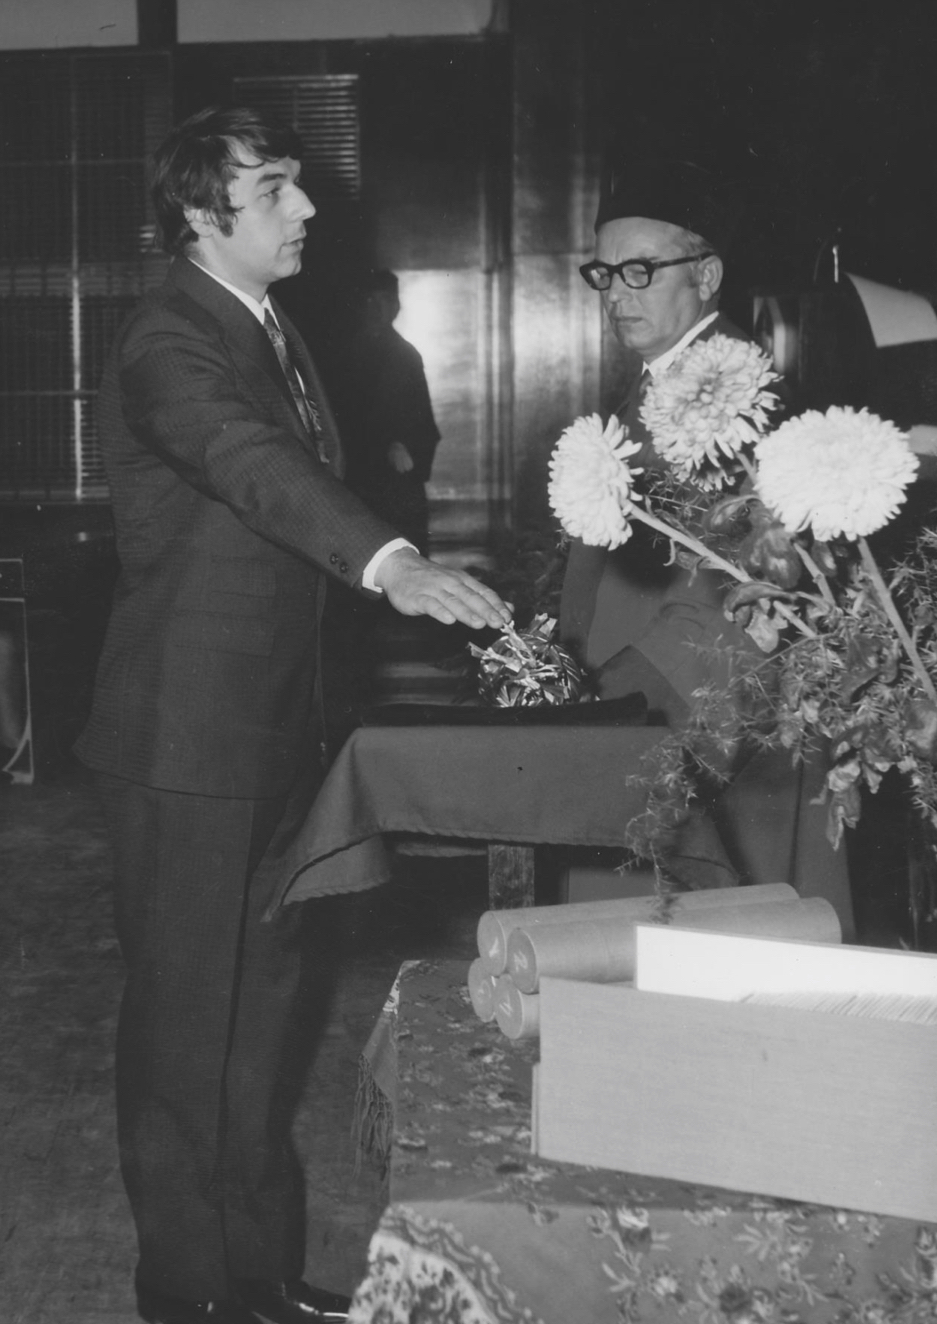 Pavel Jajtner swearing an oath as an electrical engineer graduate, Brno, October 1972